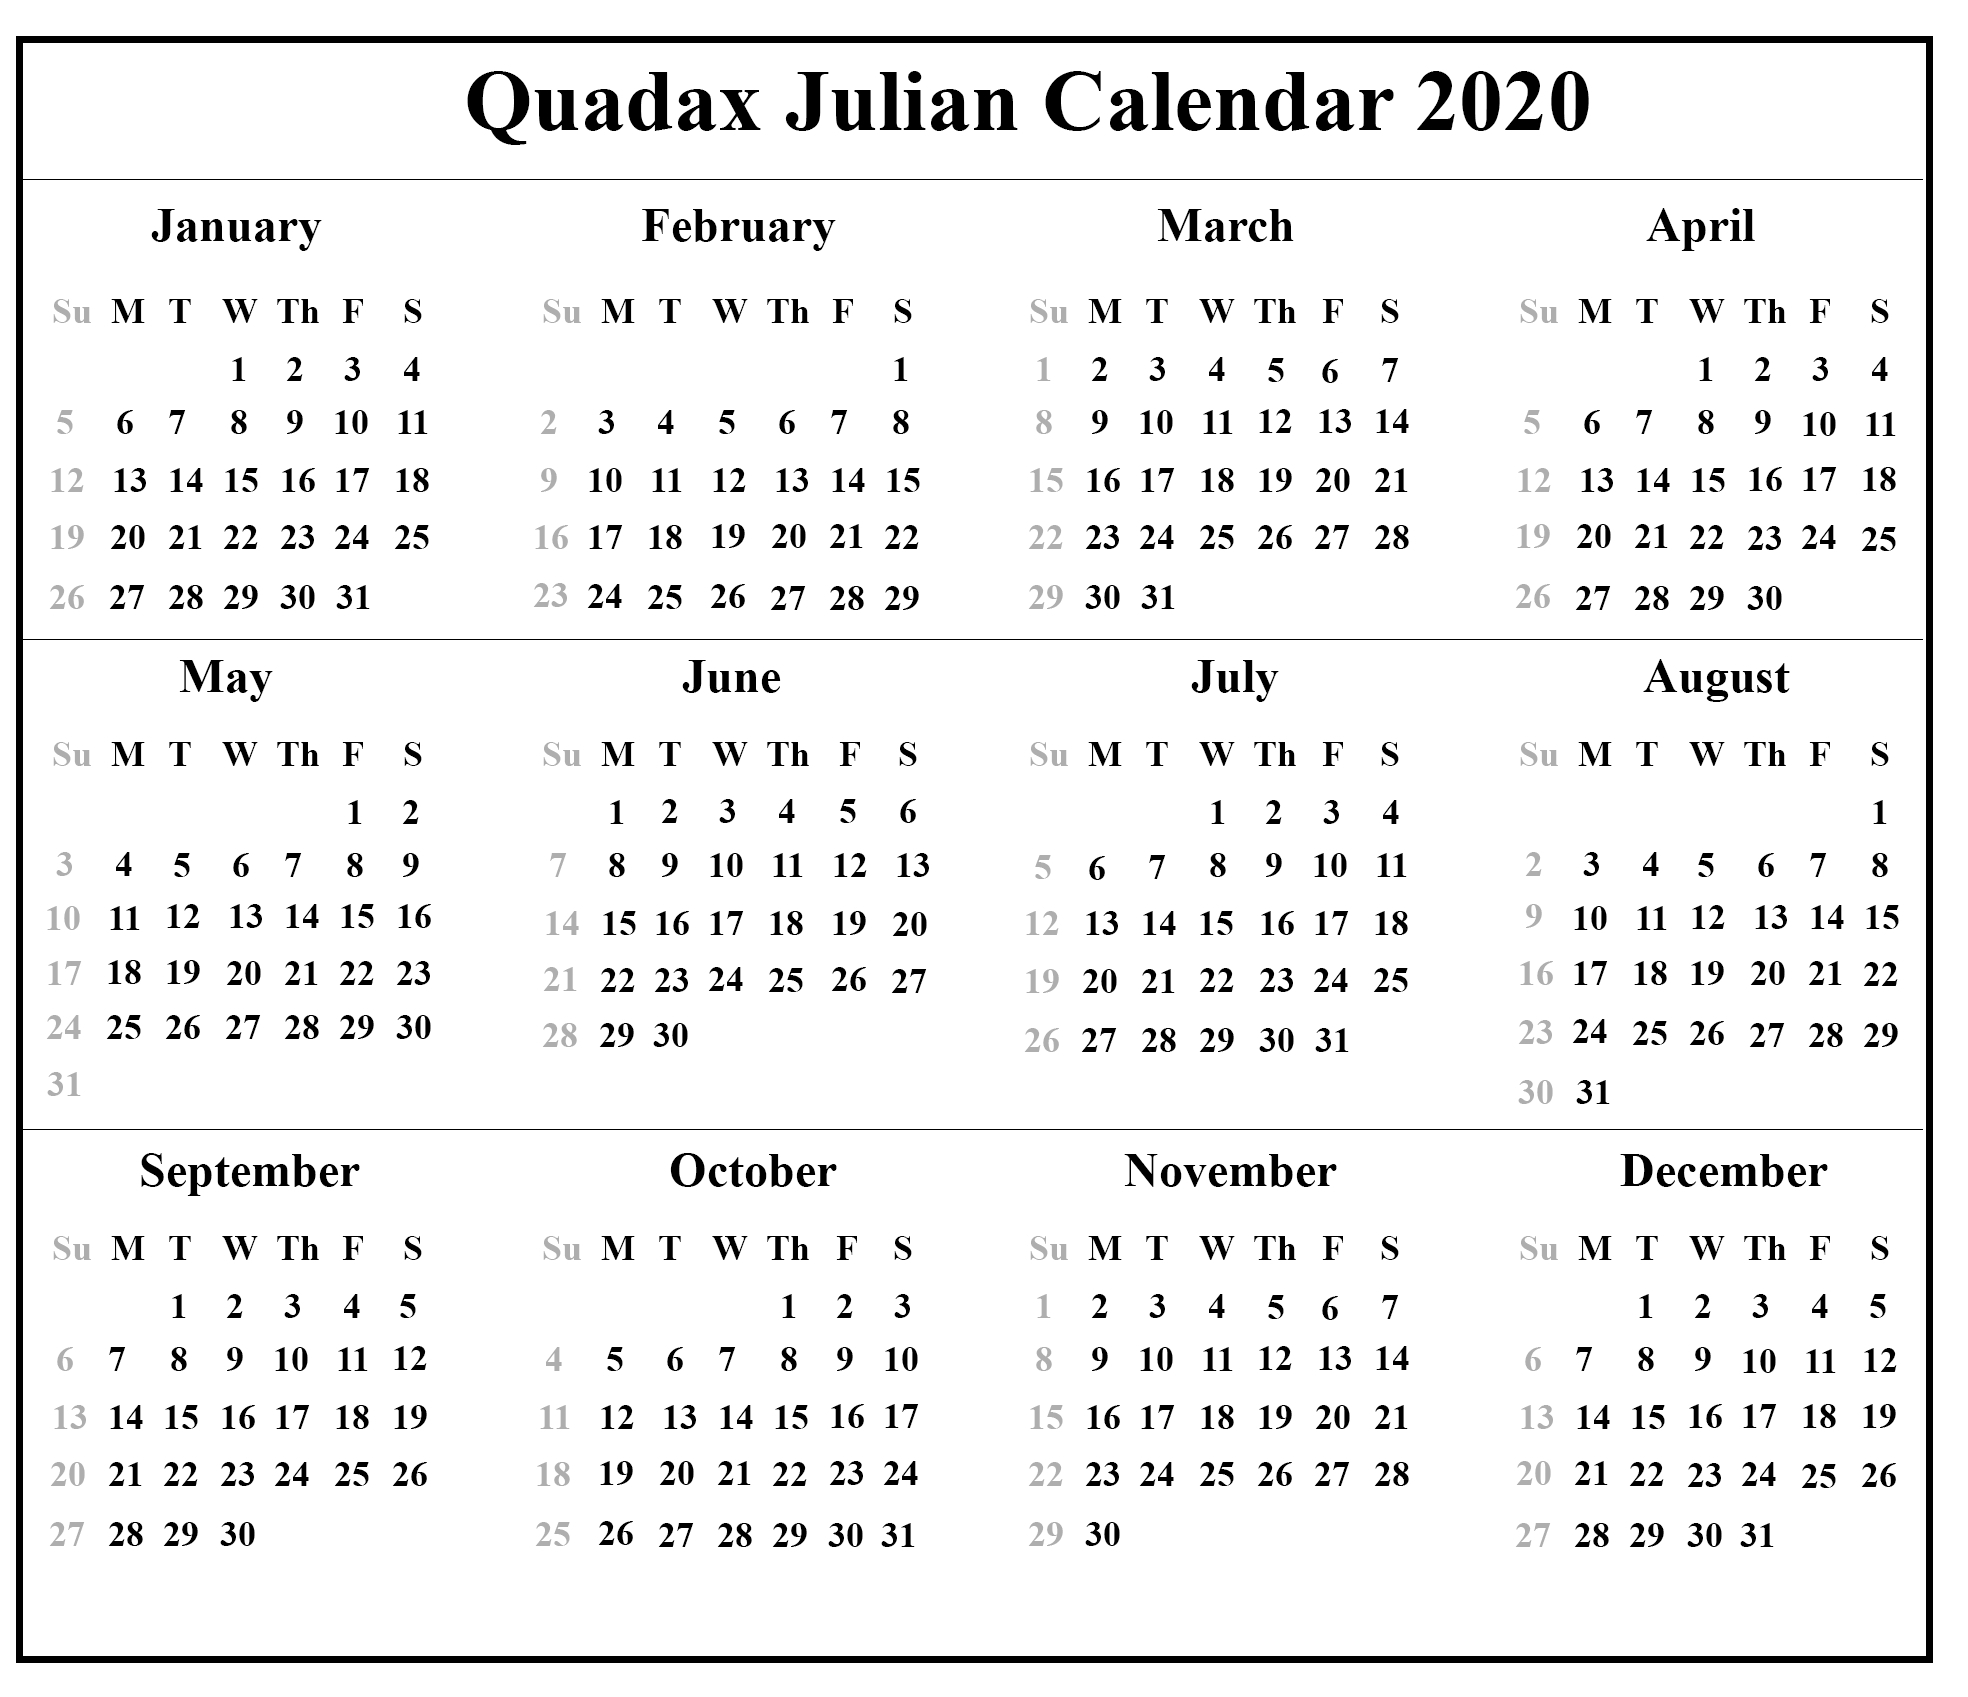 Quadax Julian Calendar 2020 Pdf | Example Calendar Printable